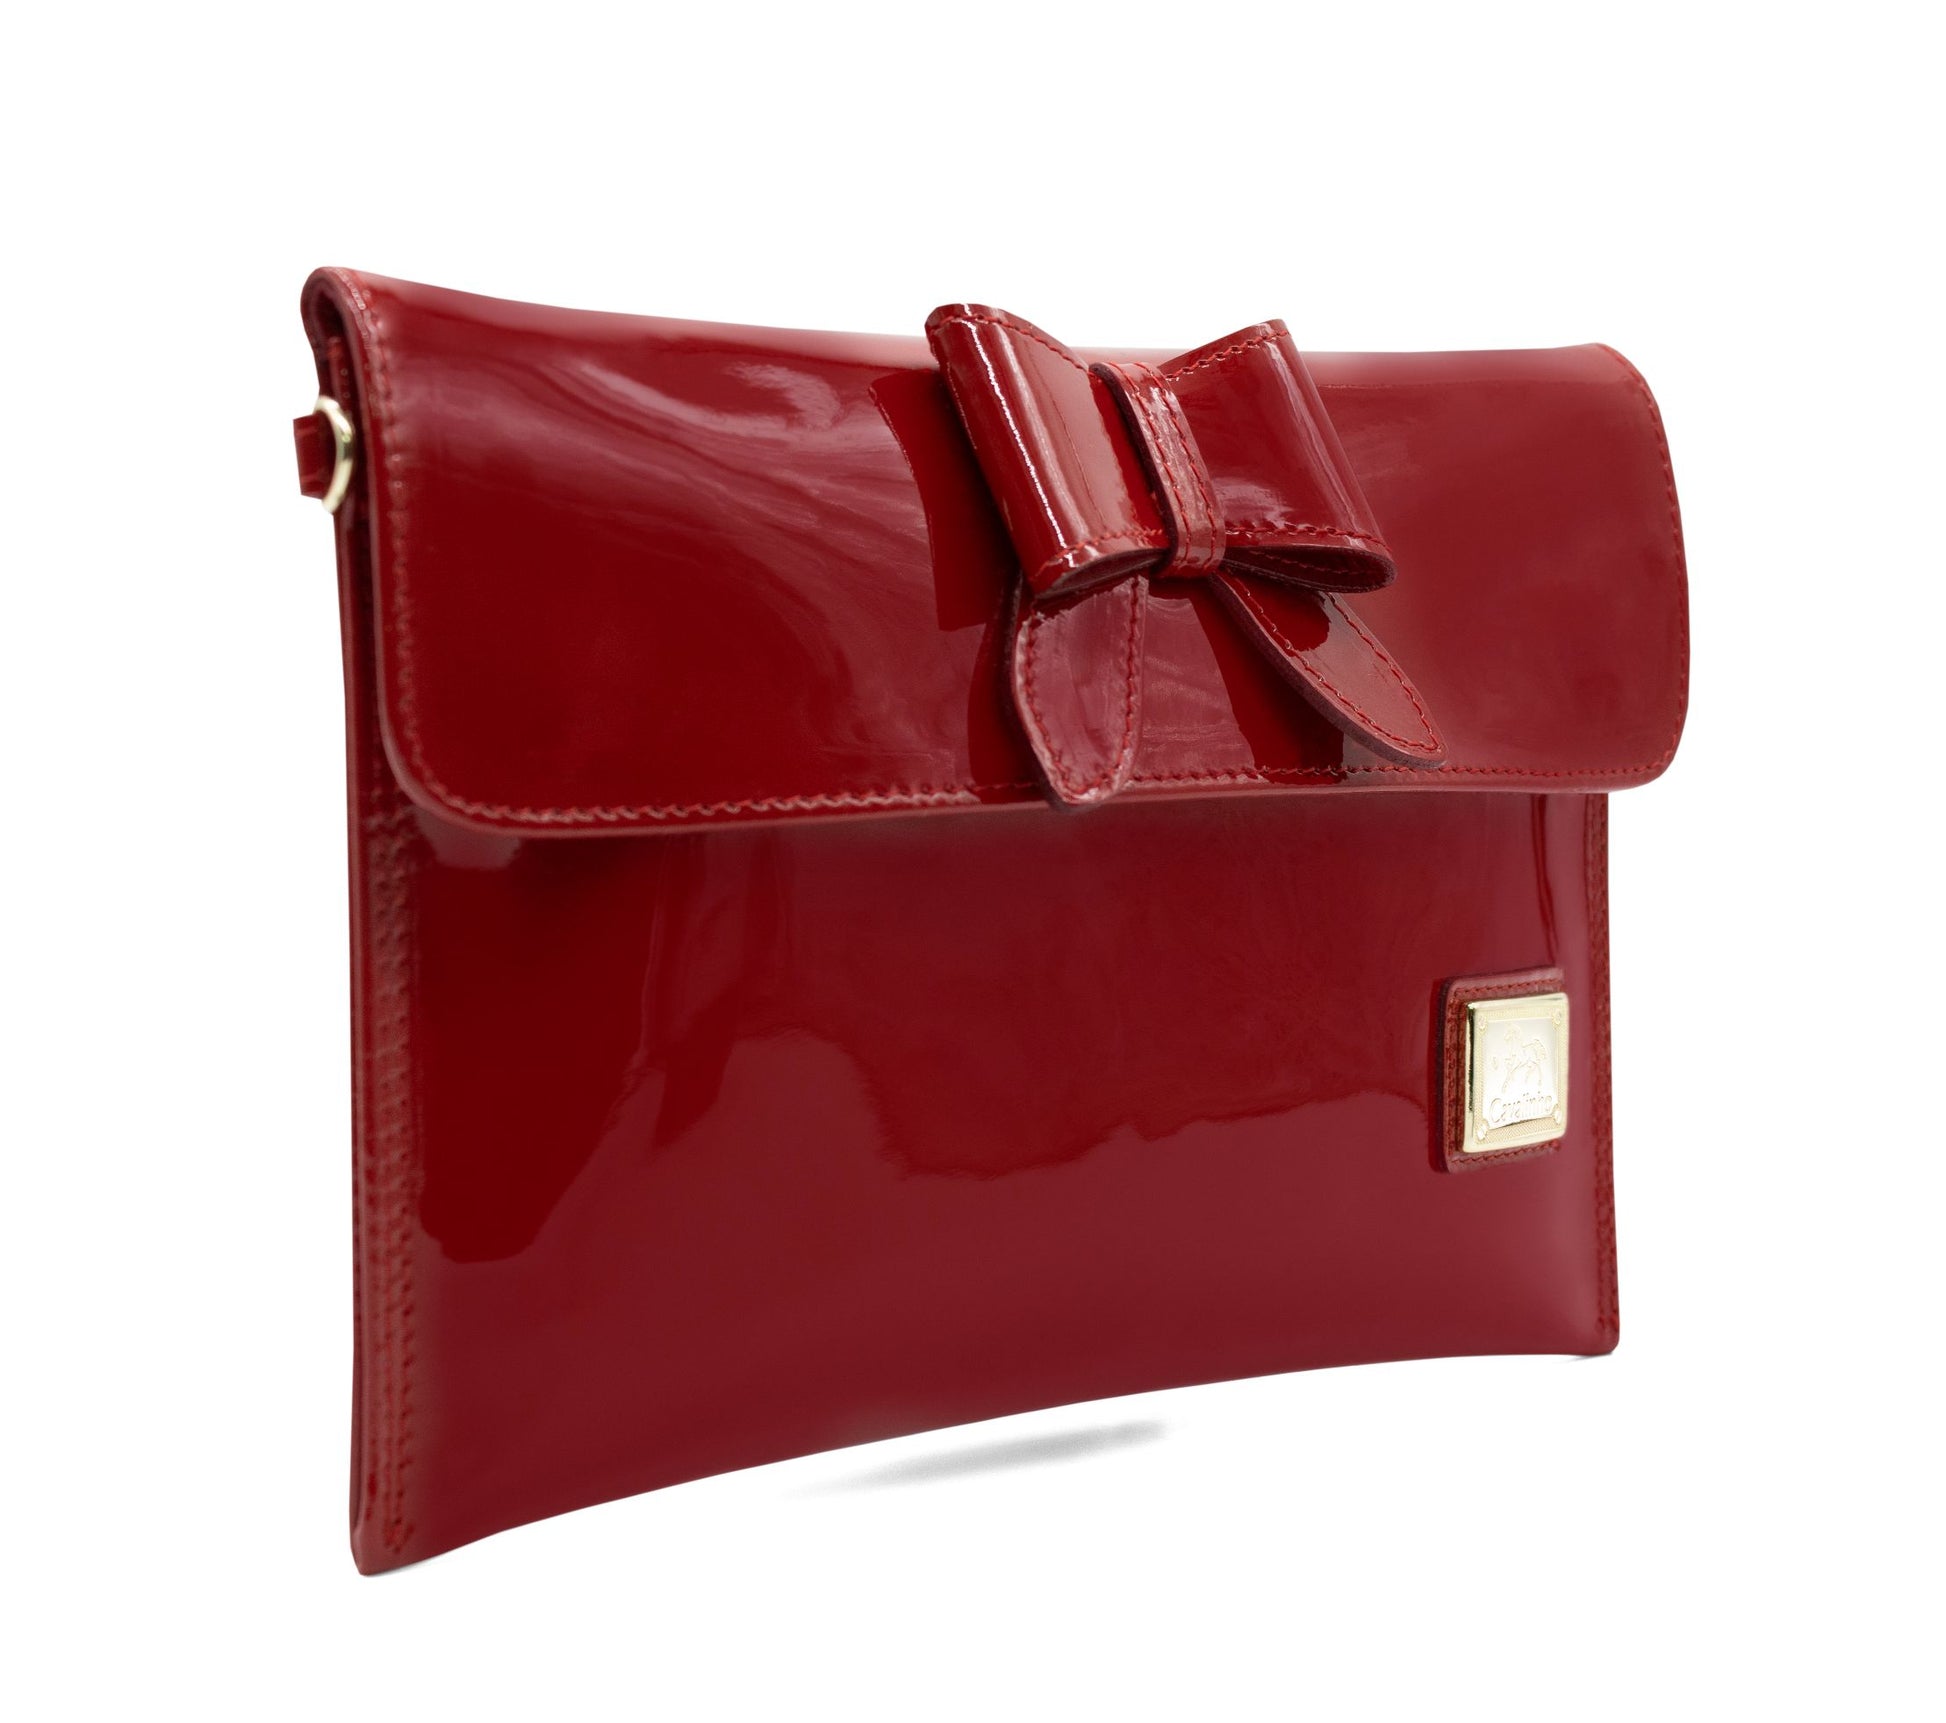 Cavalinho Patent Leather Clutch Bag - Red - 18090068.04_P2